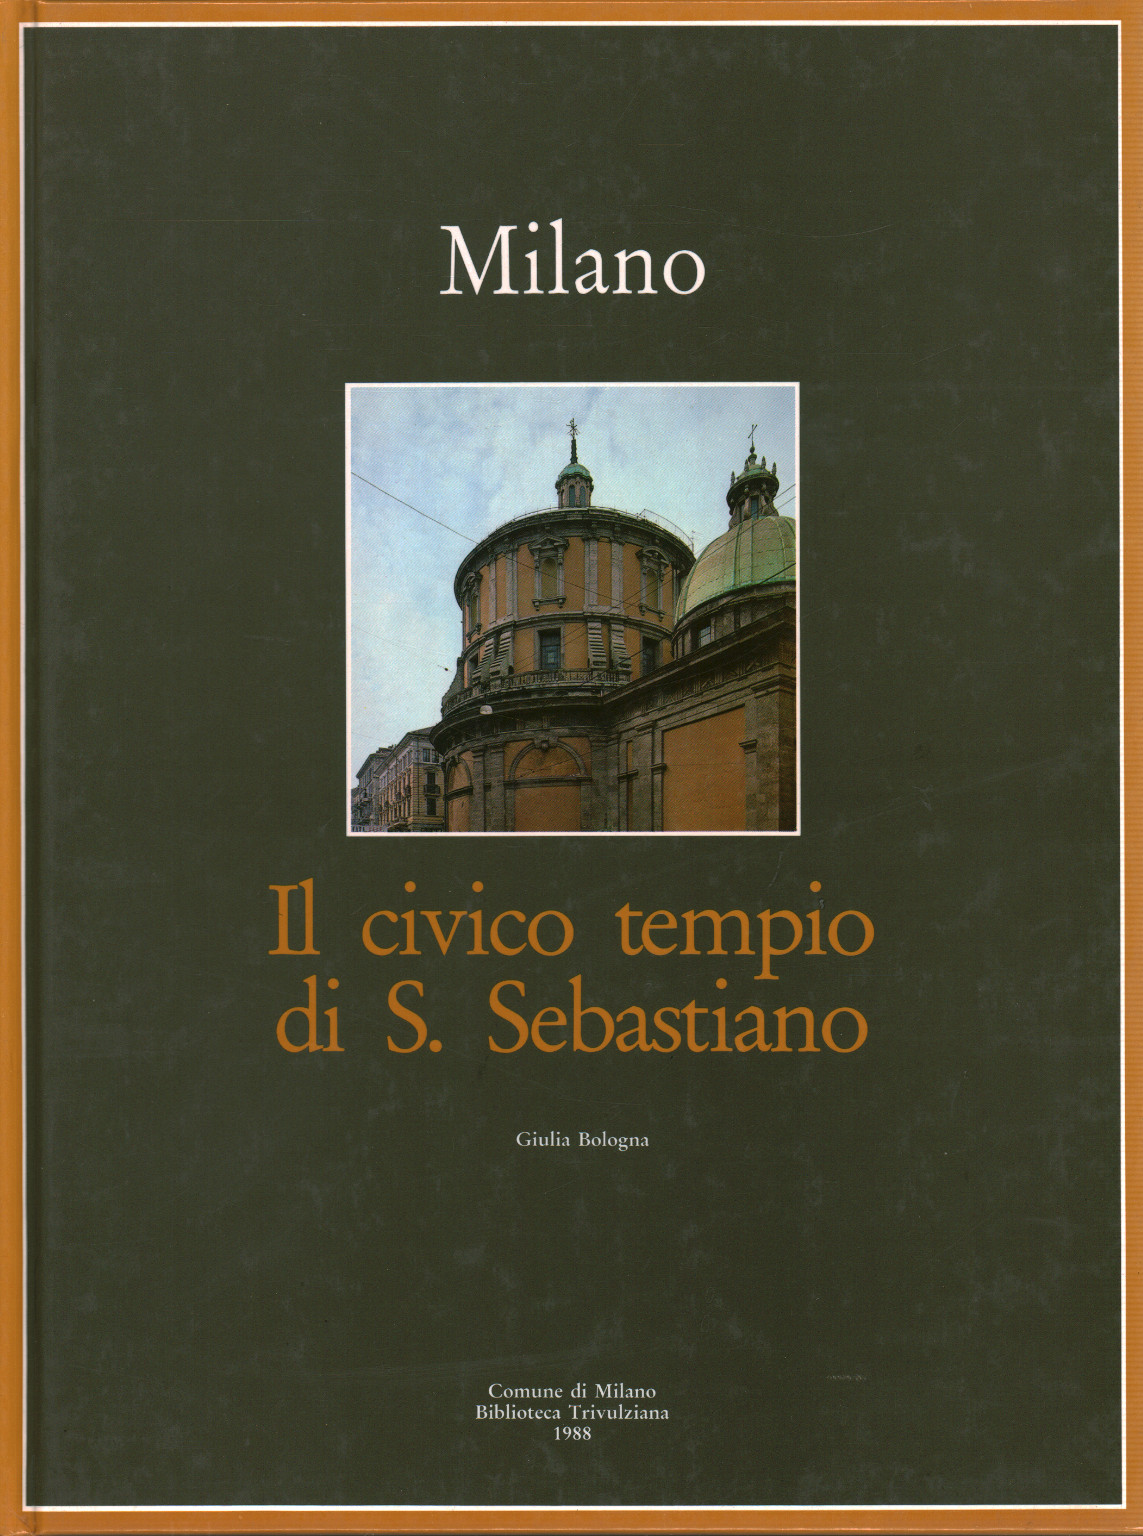 Milan. Le temple civique de S. Sebastiano, s.a.